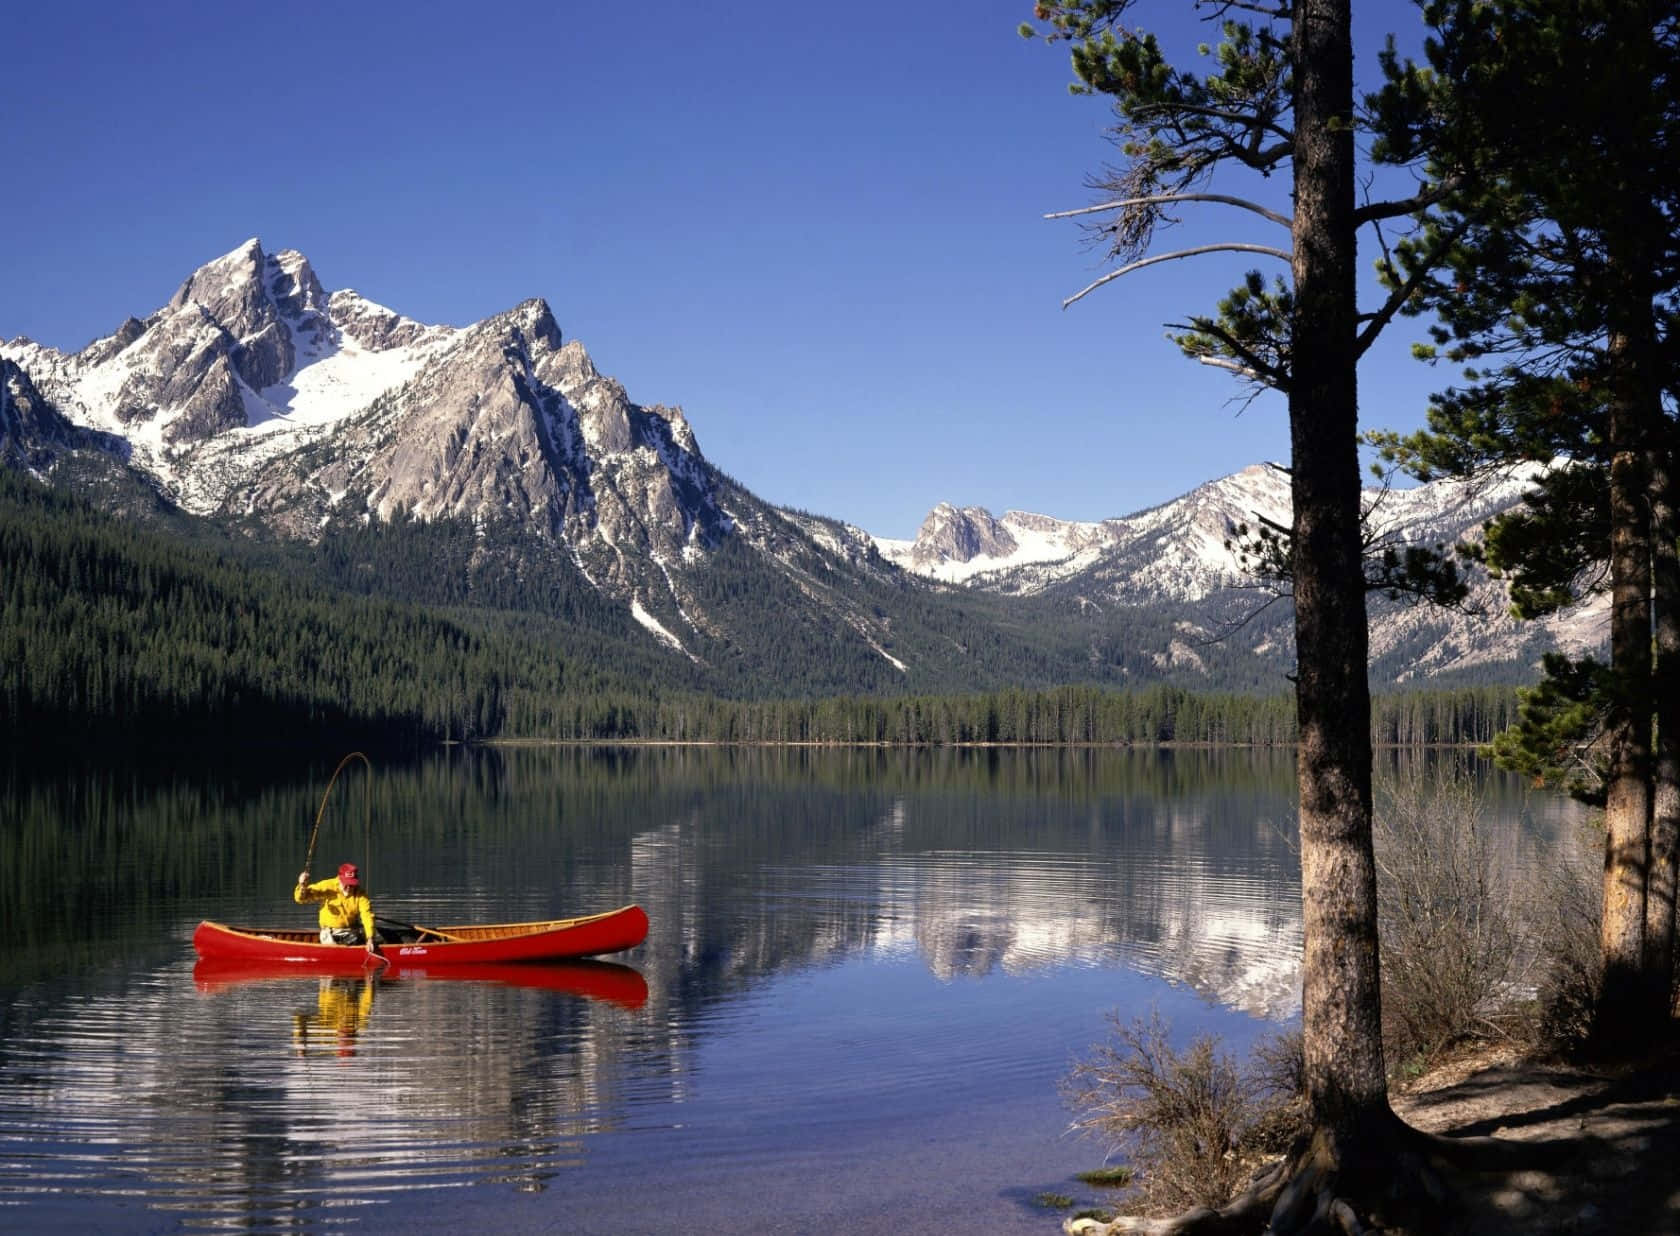 Unhombre Está Remando Una Canoa Roja En Un Lago Con Montañas Al Fondo Fondo de pantalla